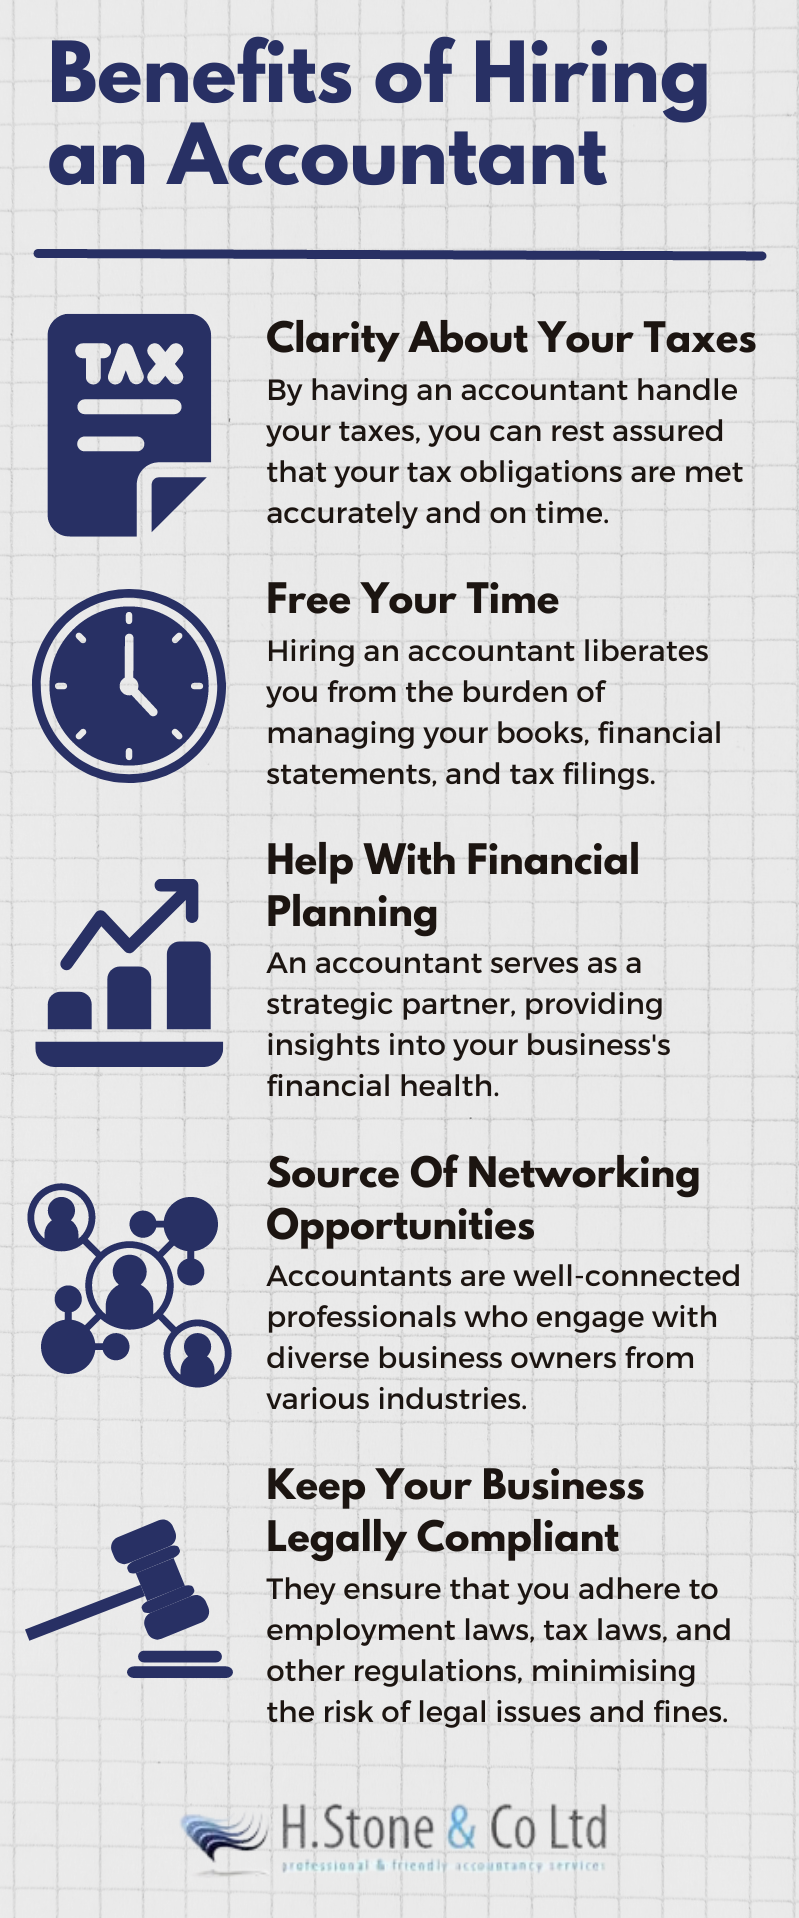 Benefits of Hiring an Accountant